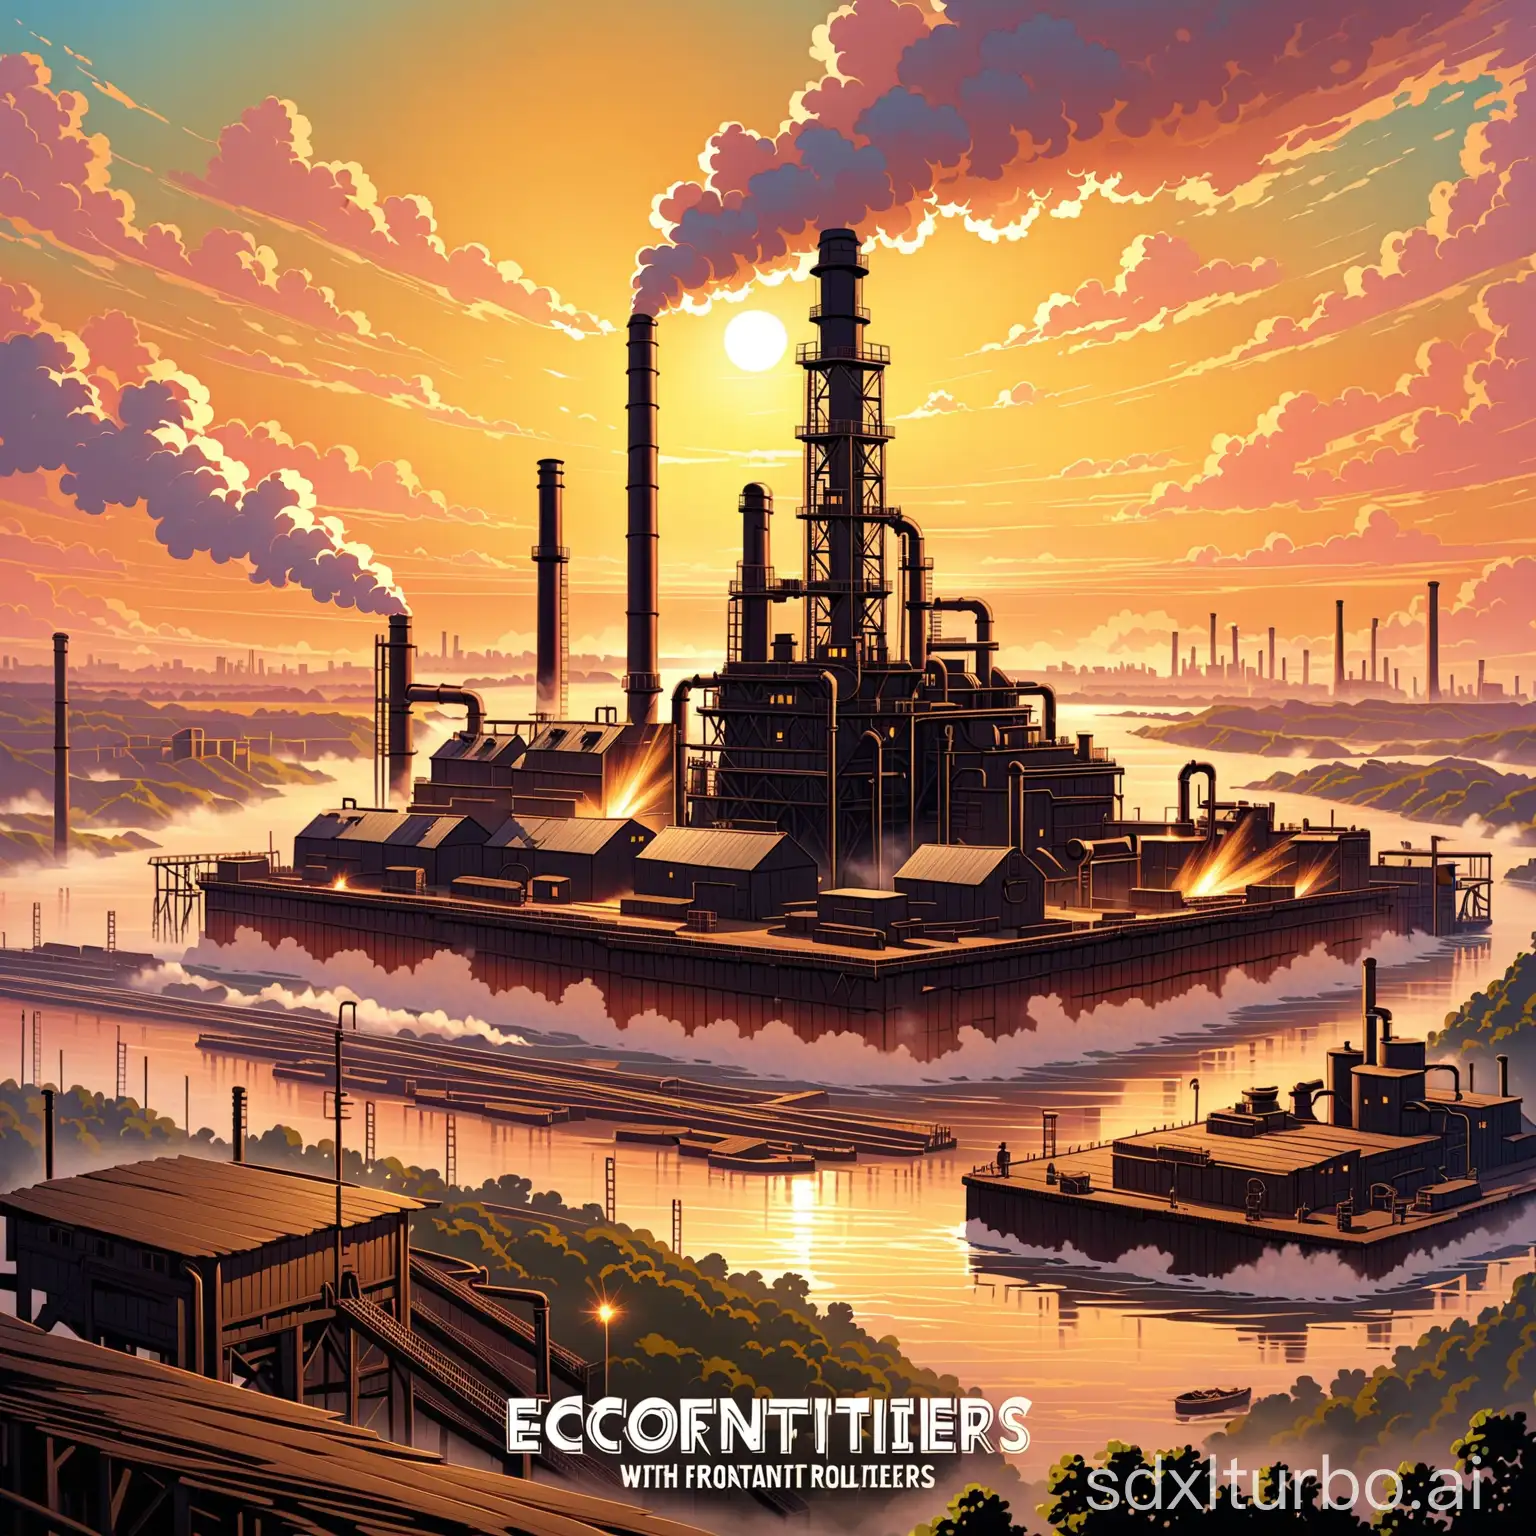 Ecofrontiers-Industrial-Revolution-Reimagined-in-Natures-Embrace